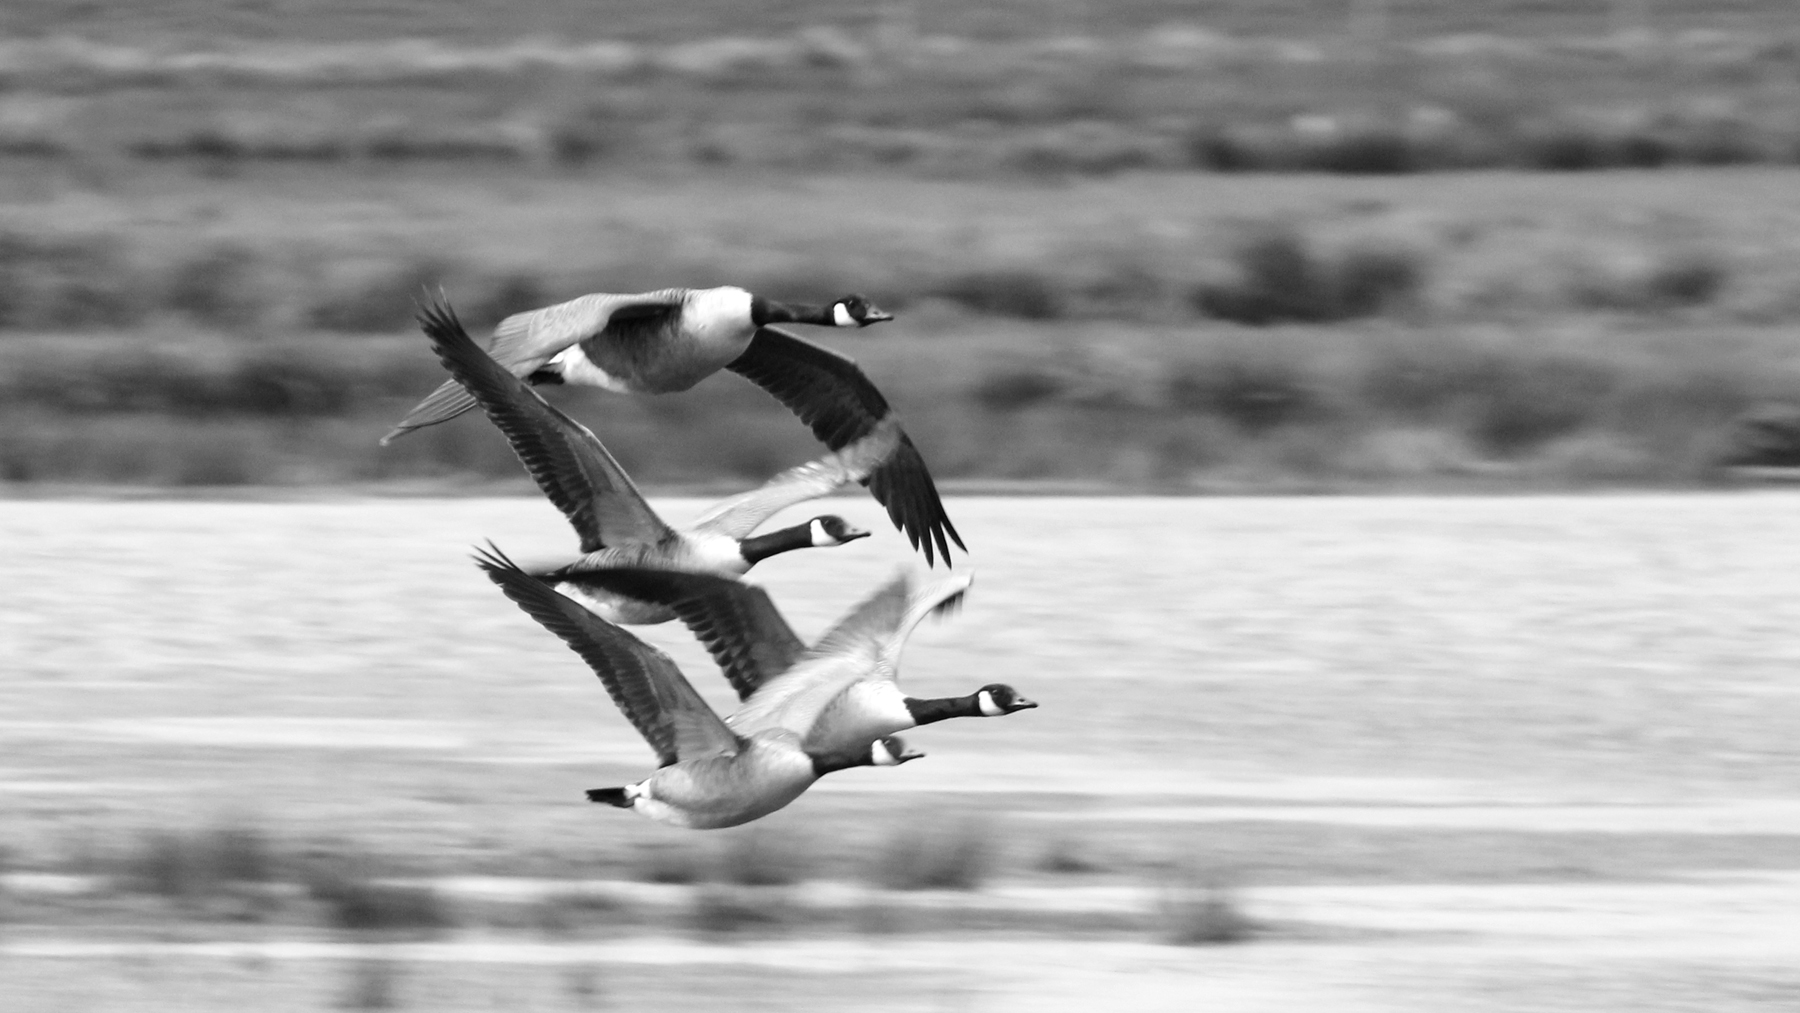 15. Flying Canda Geese